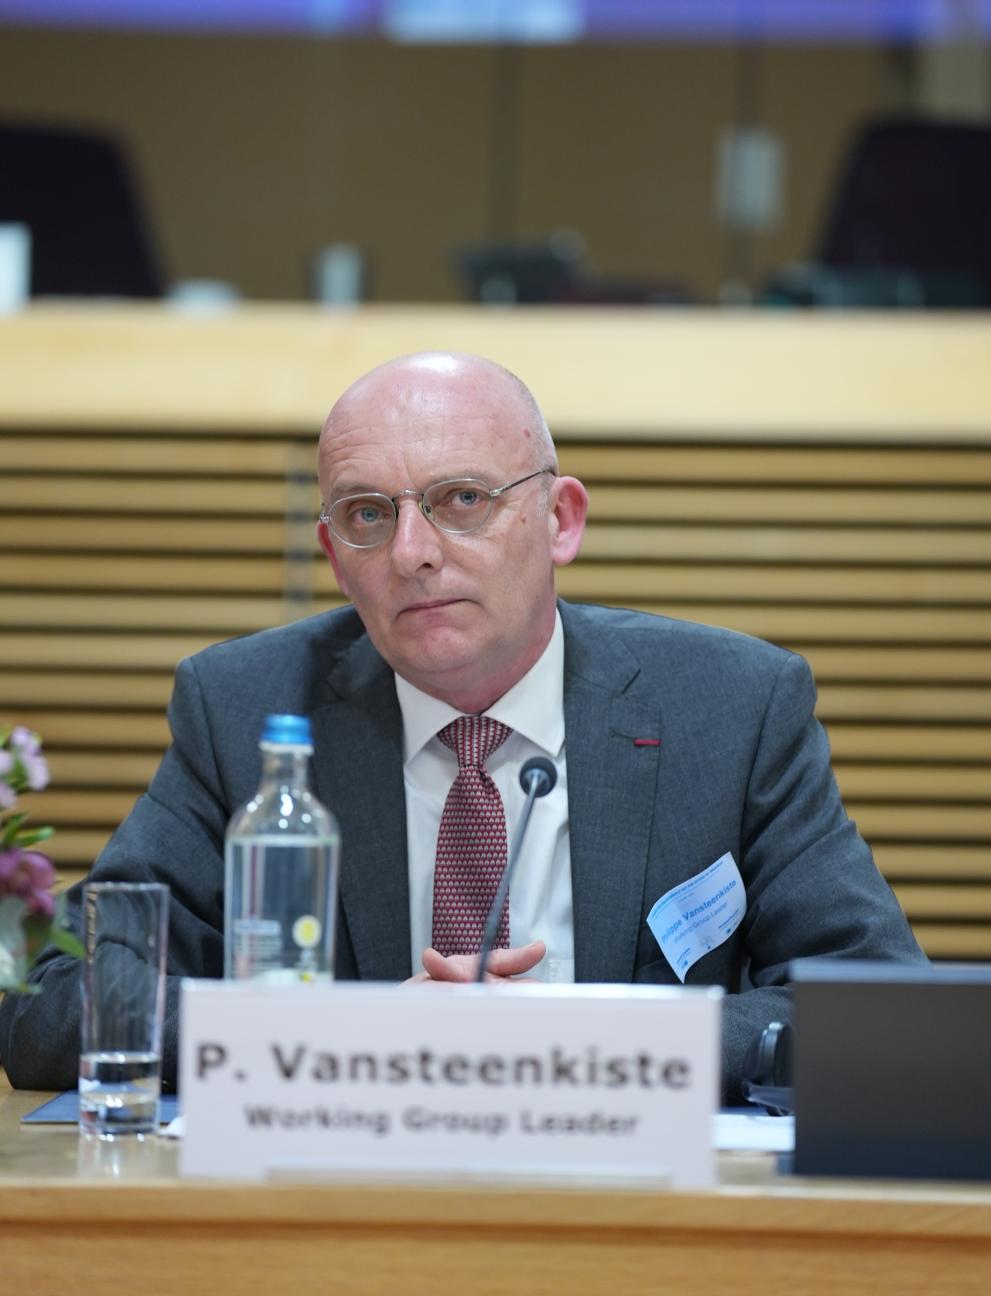 Working Group leaders: Philippe Vansteenkiste